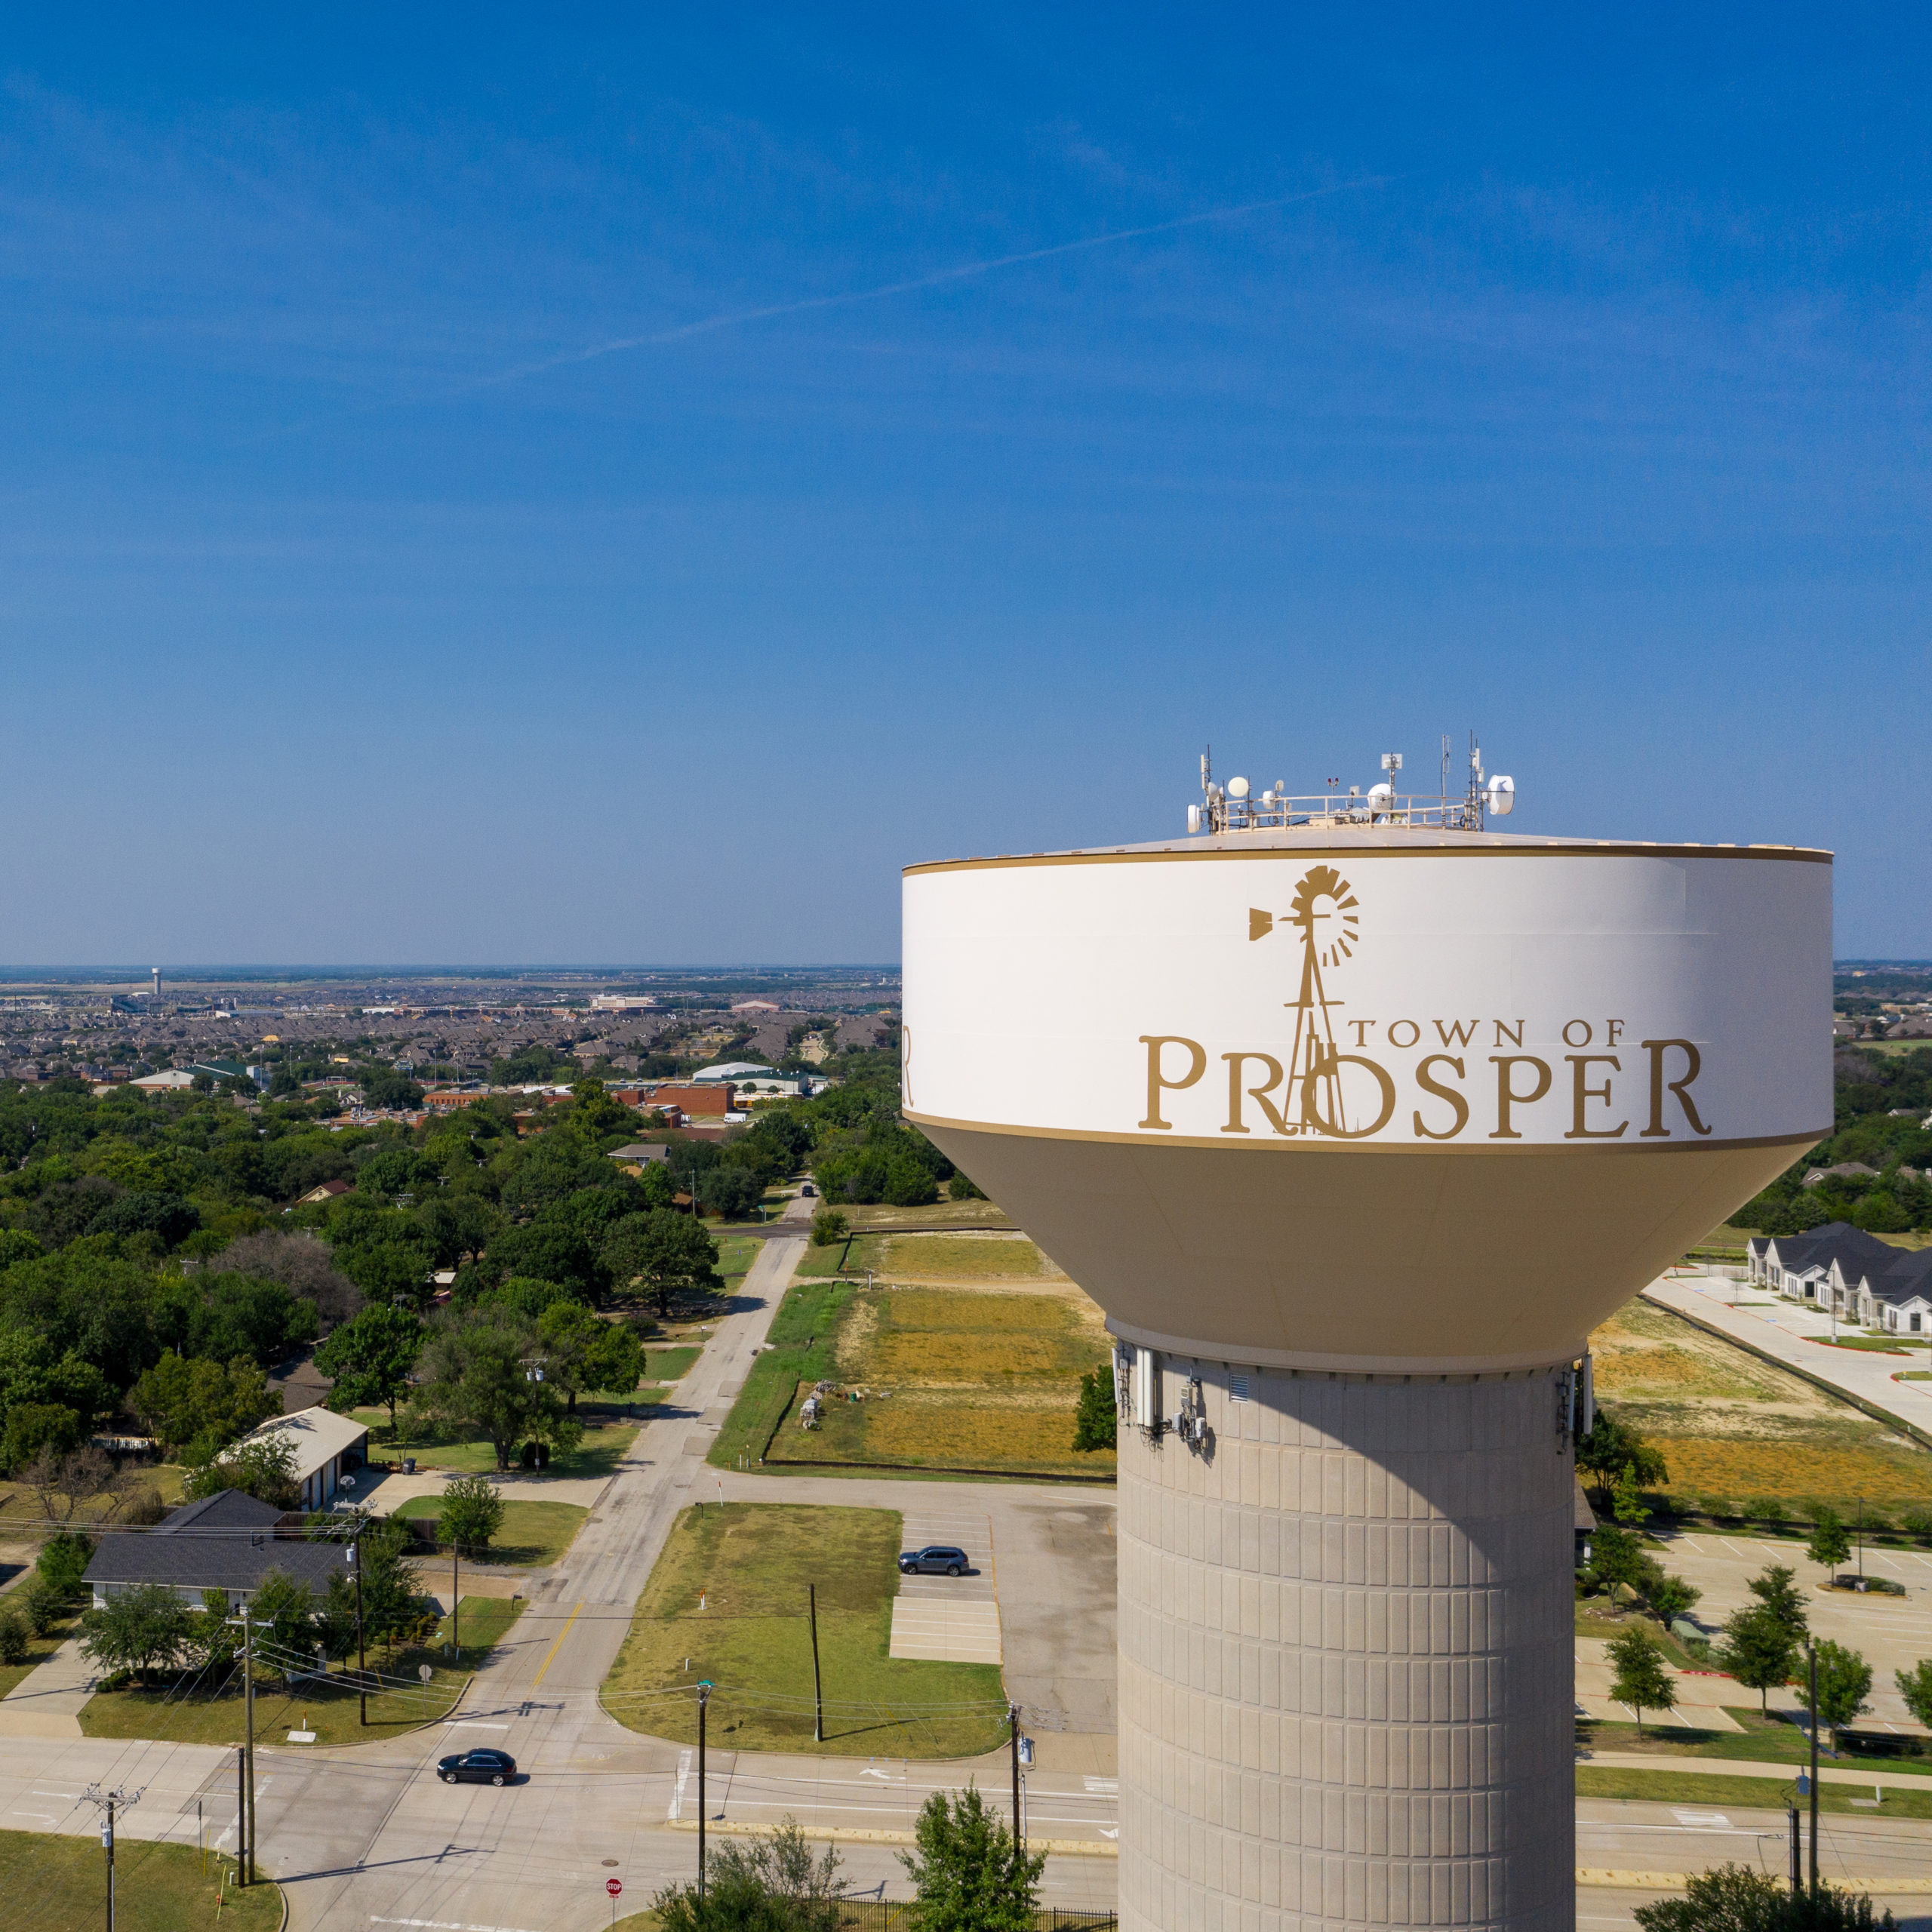 Prosper, Texas